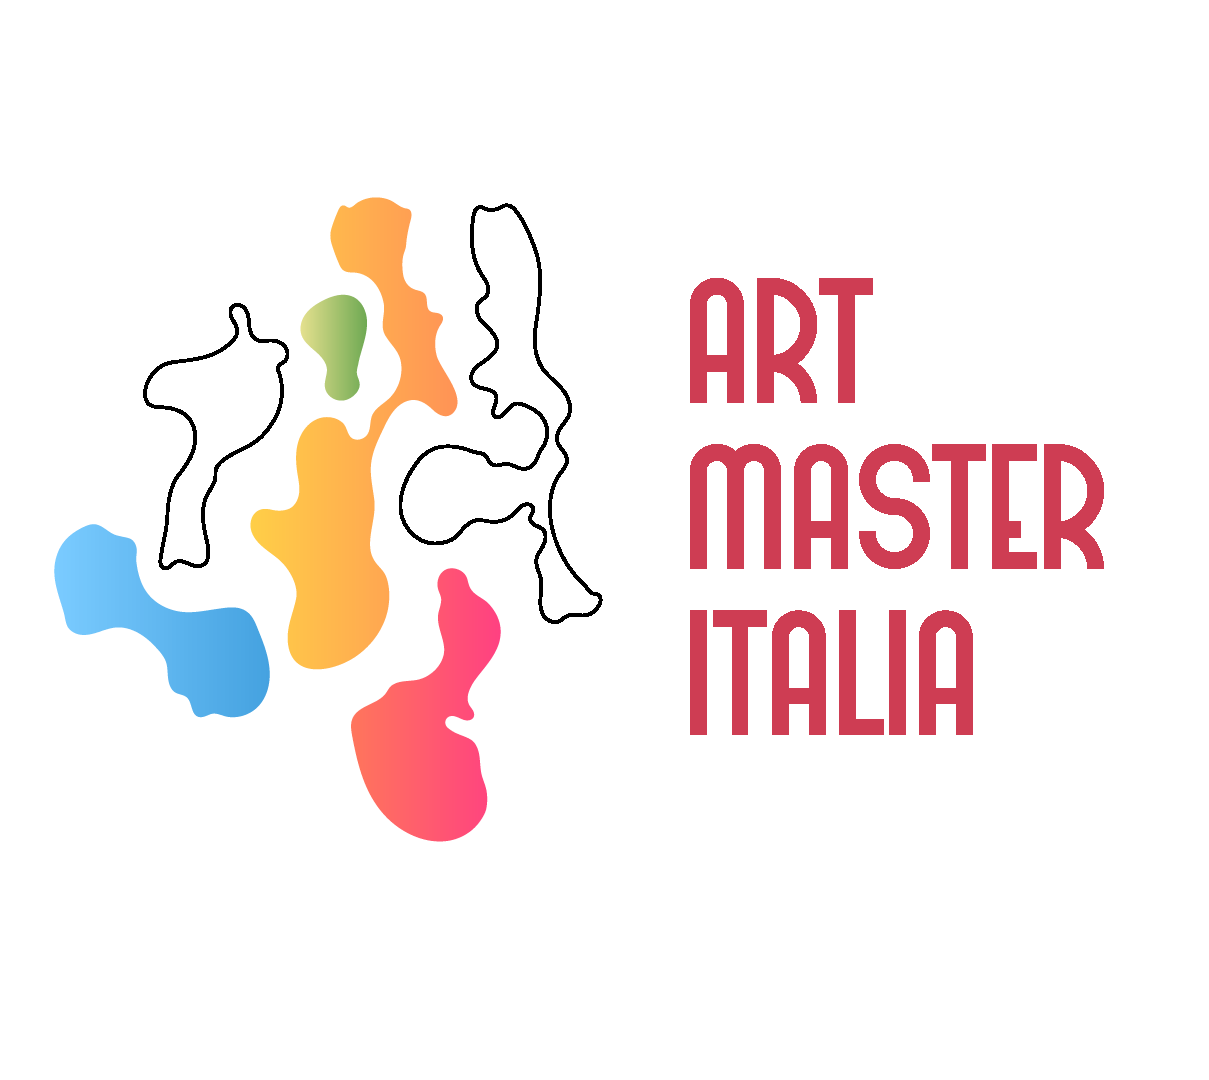 ArtMaster